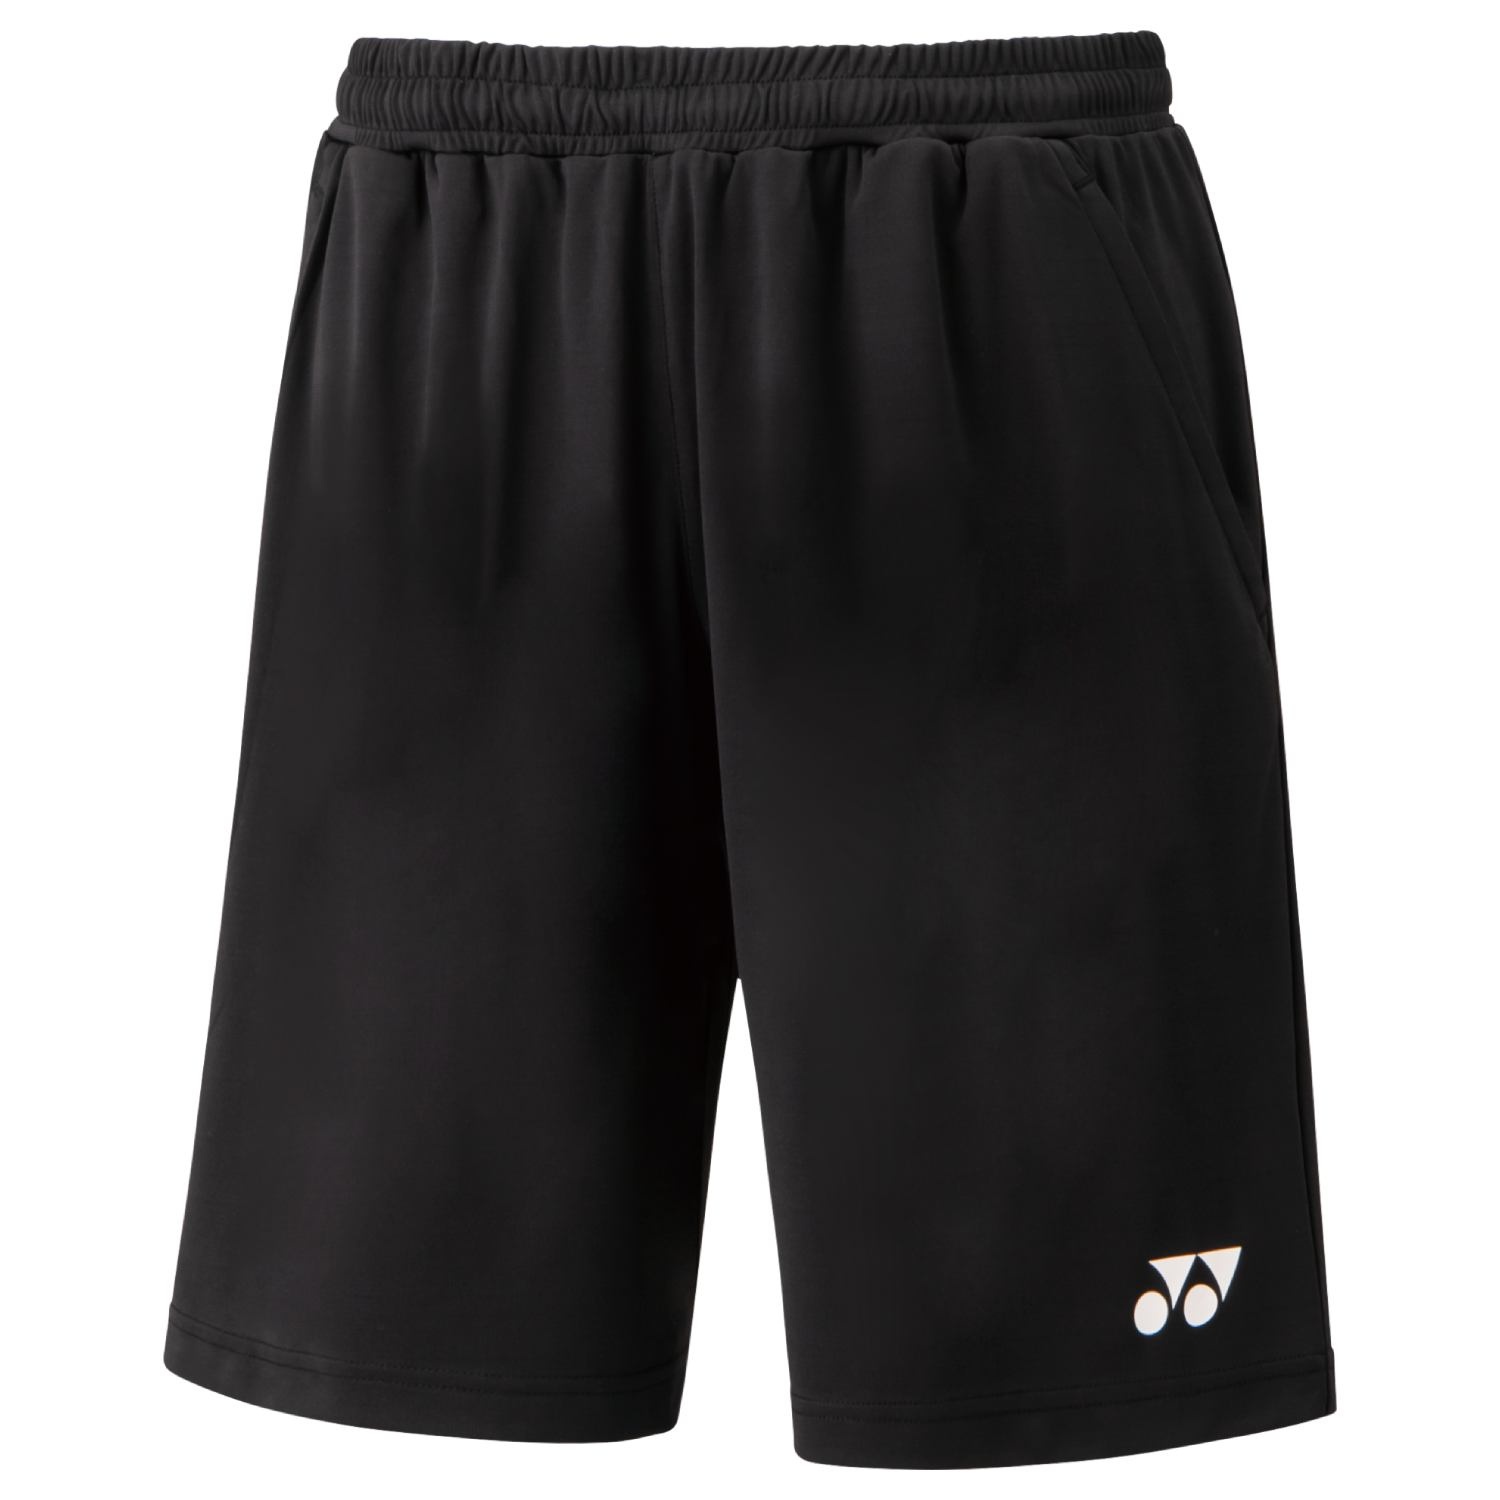 Yonex Shorts Black